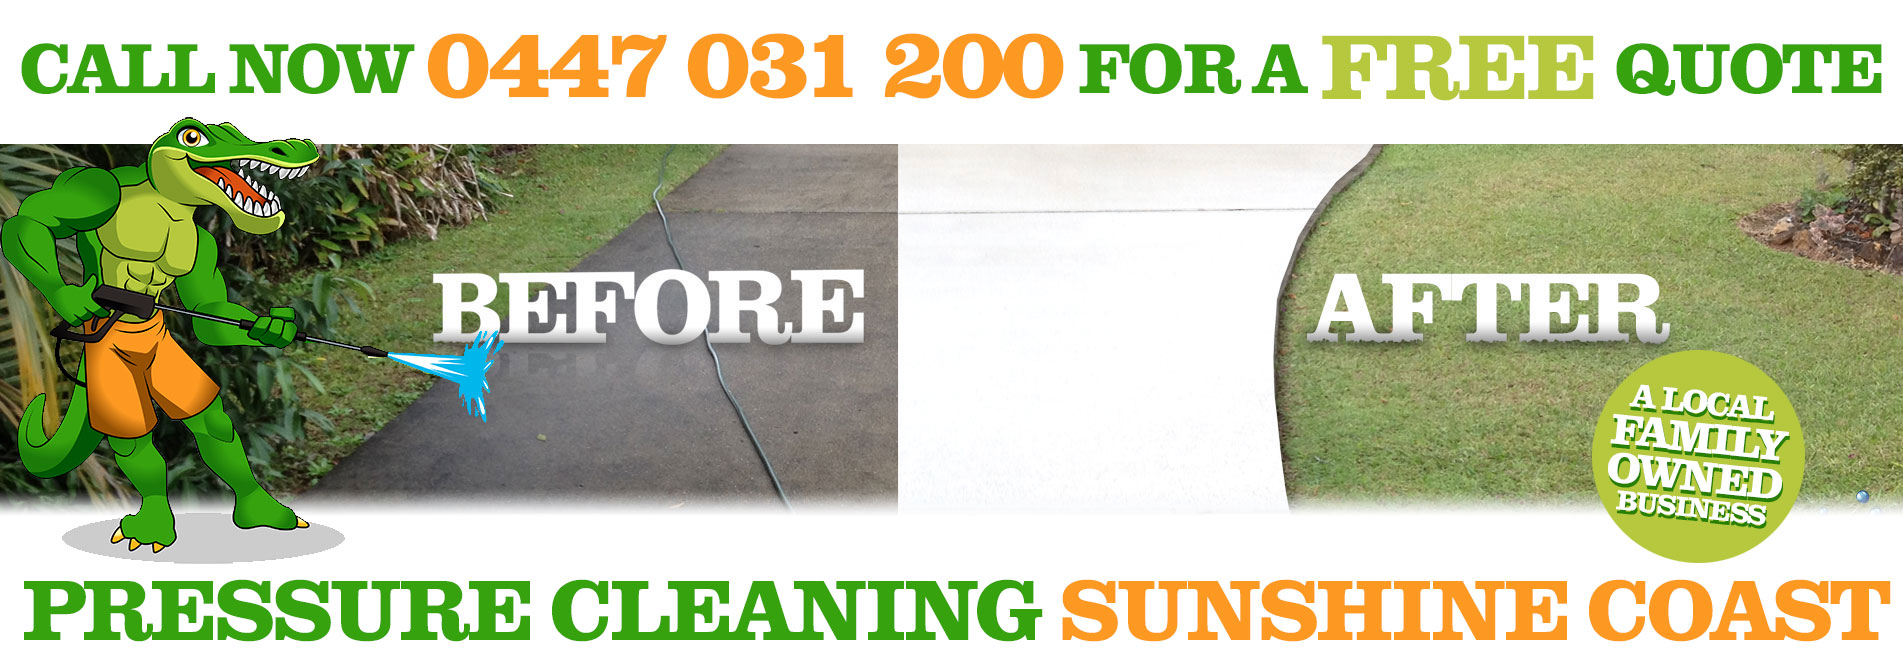 Pressure Cleaning Sunshine Coast Website Home Page Slide 01